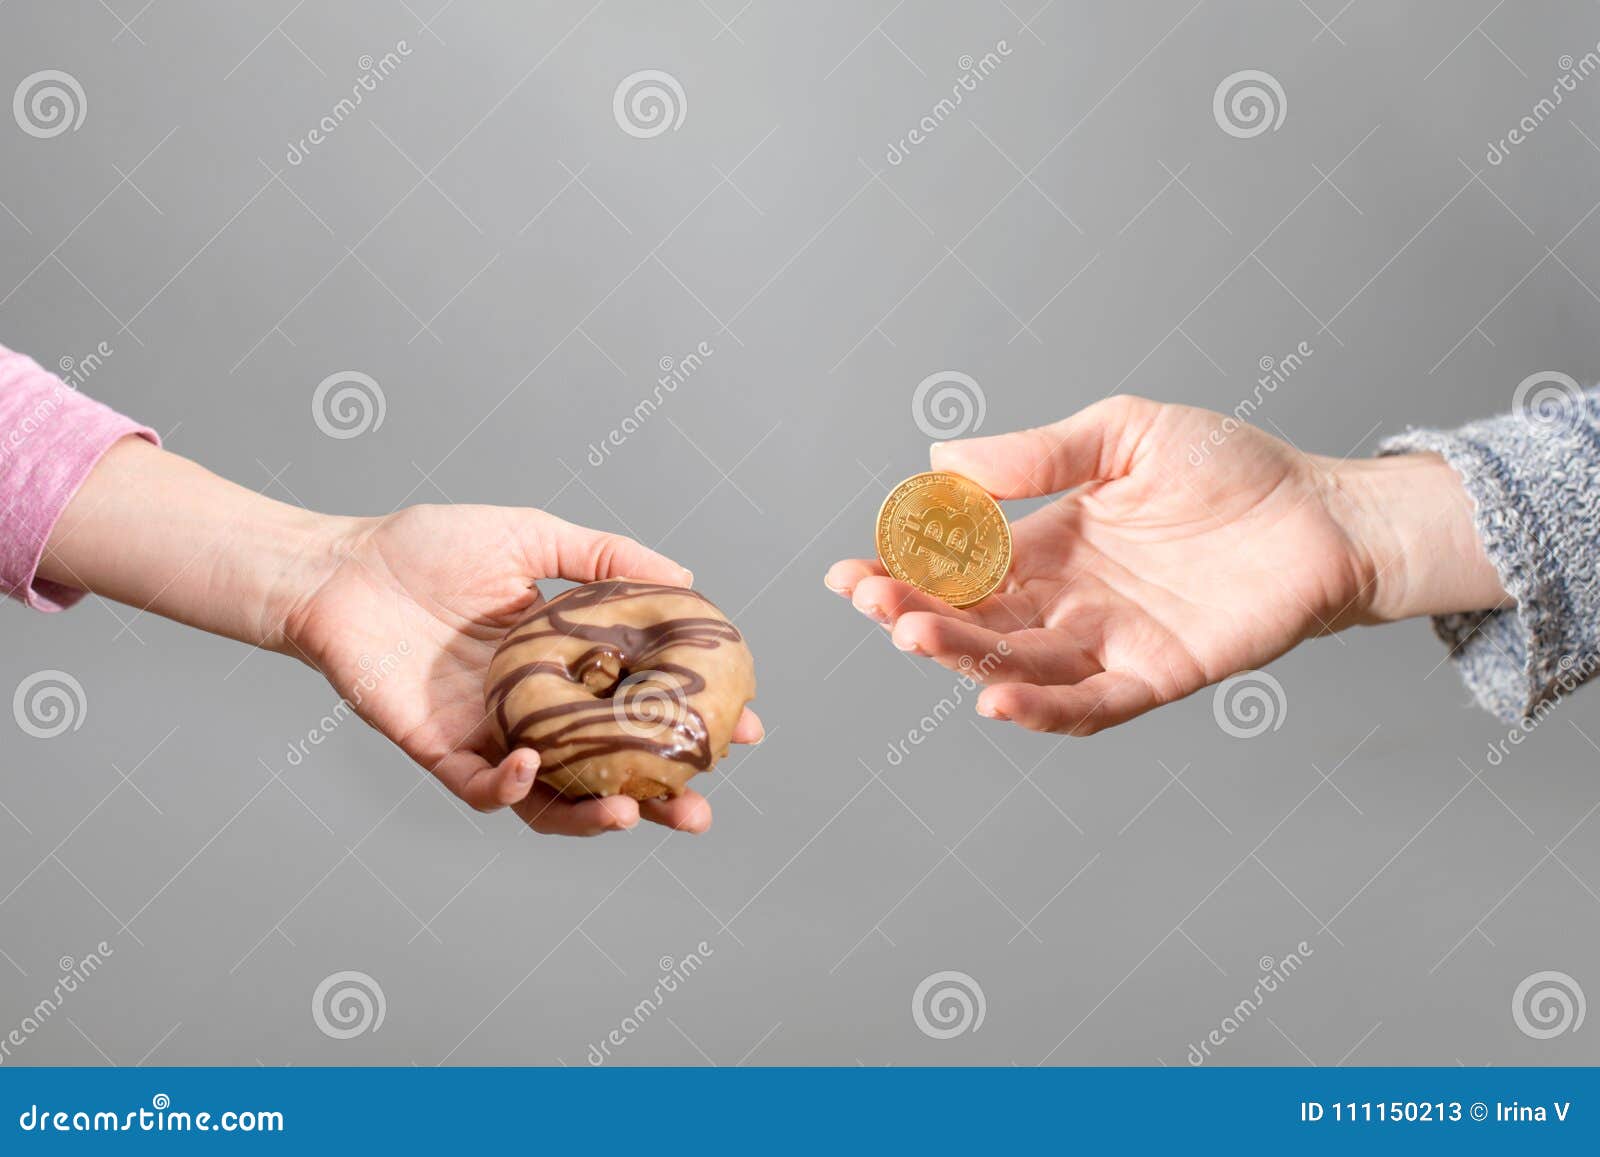 market coin exchange